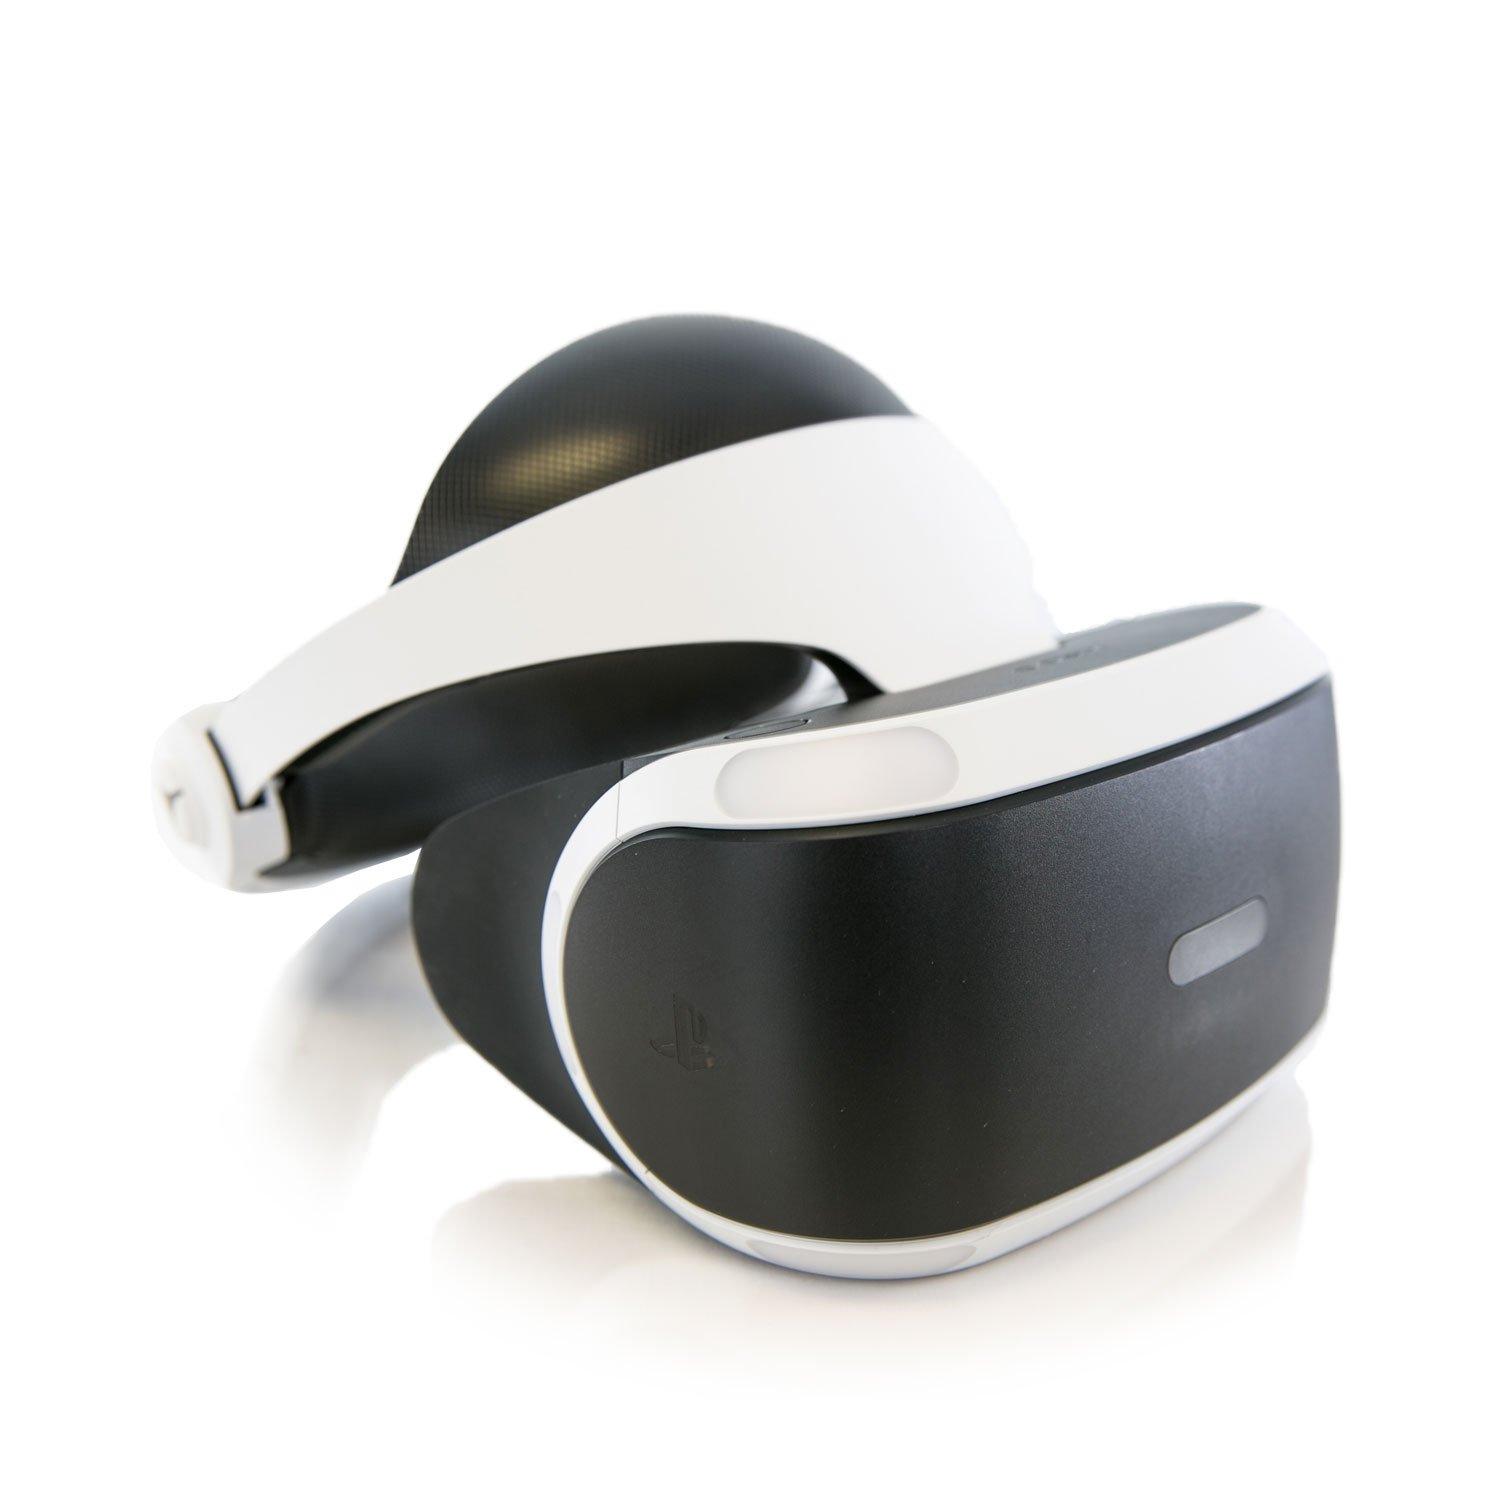 PlayStation VR HDR Headset| Premium Refurbished | PlayStation 4